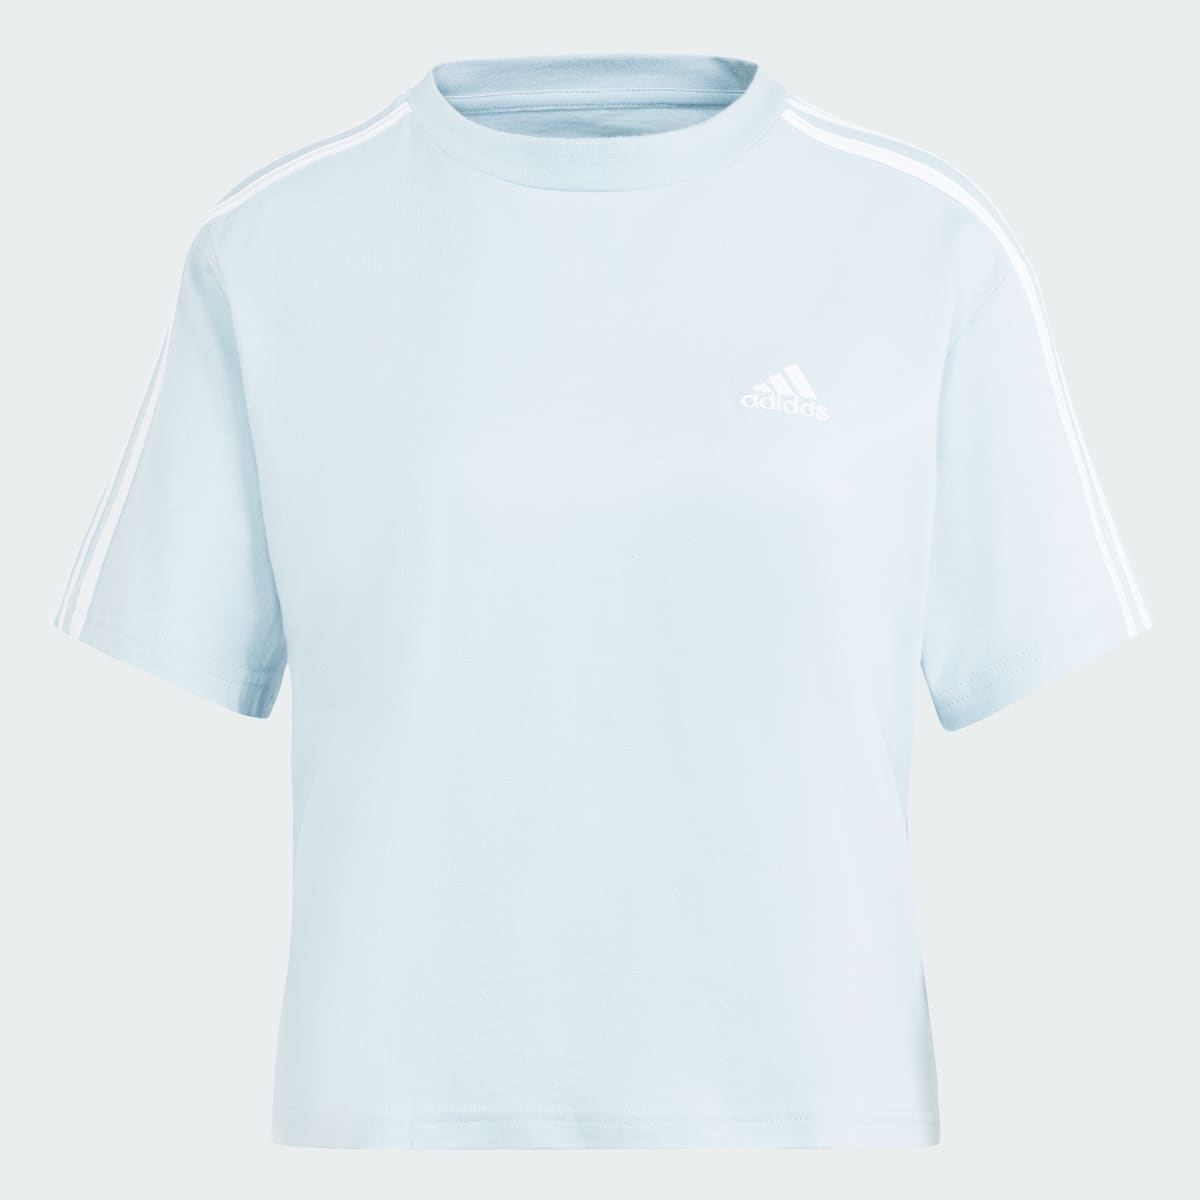 Adidas Crop top en jersey Essentials 3-Stripes. 5